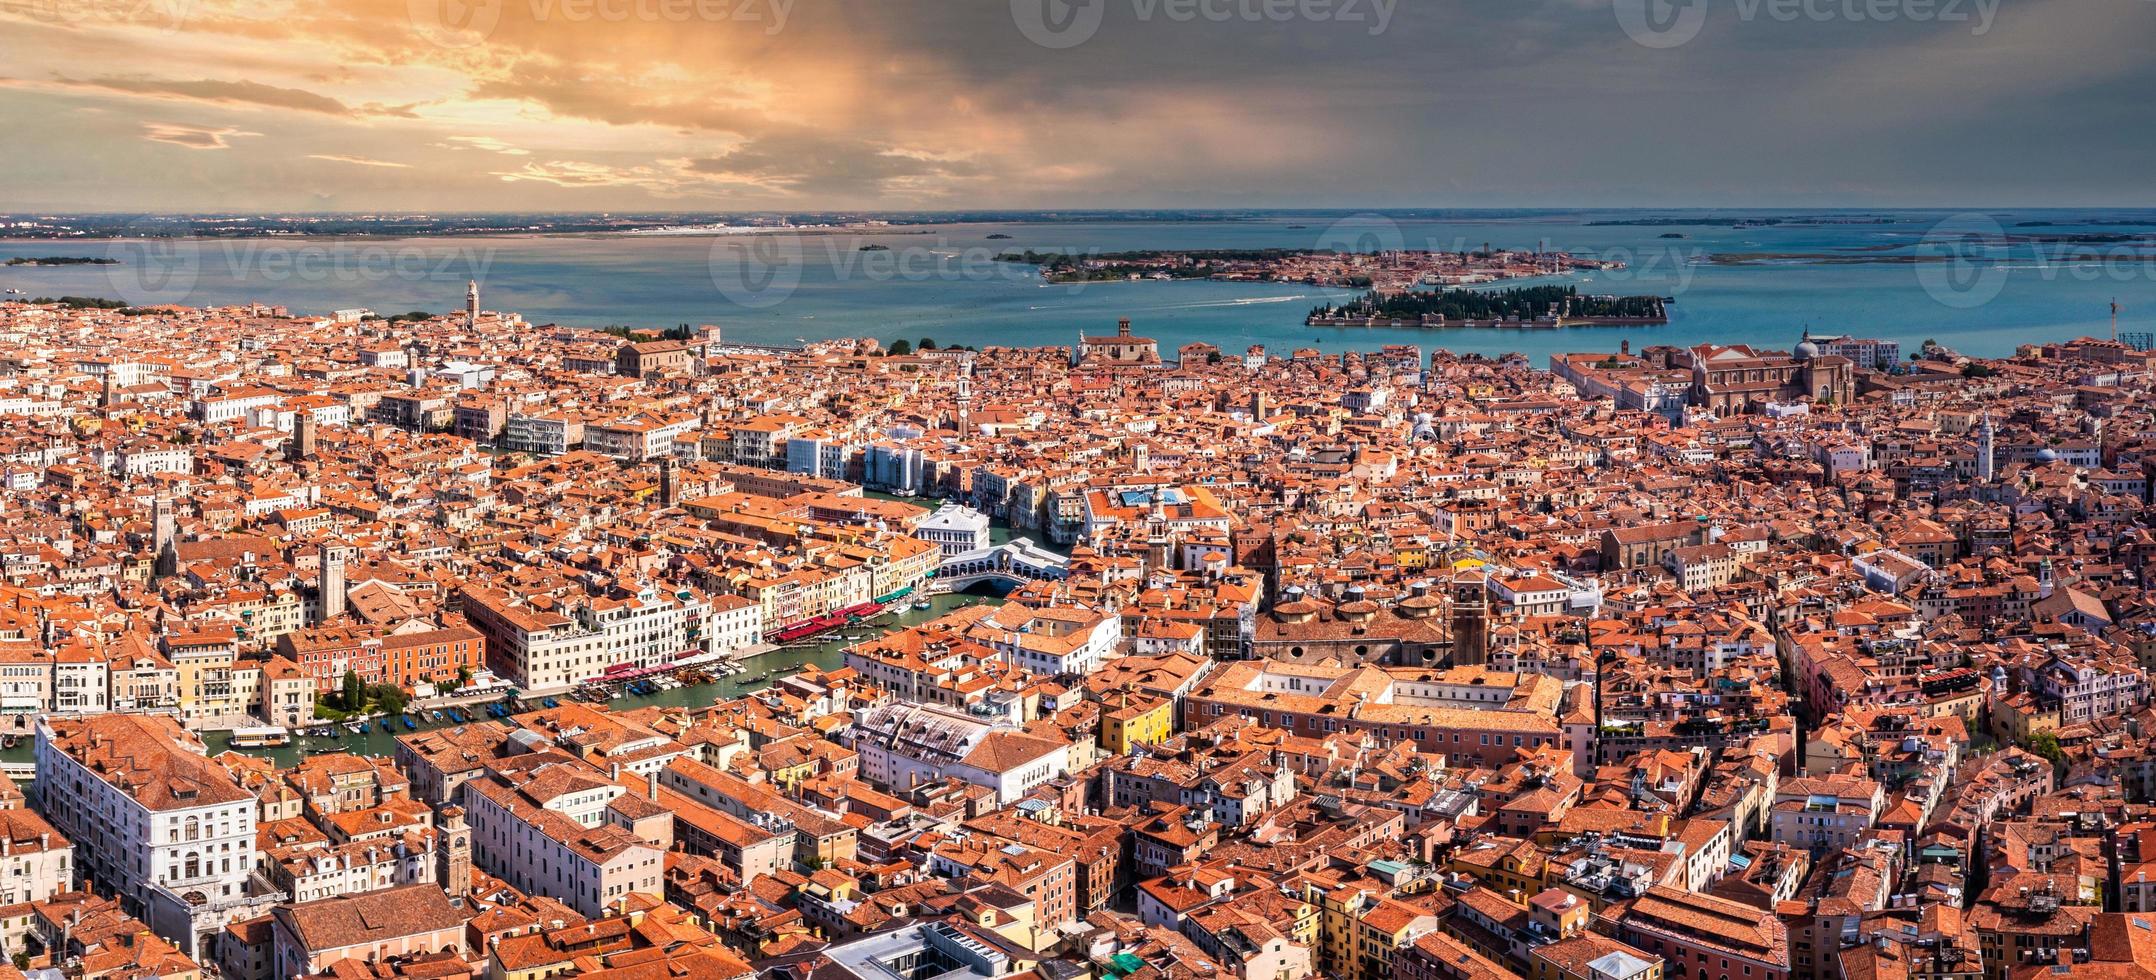 Aerial View Of Venice near Saint Mark's Square photo